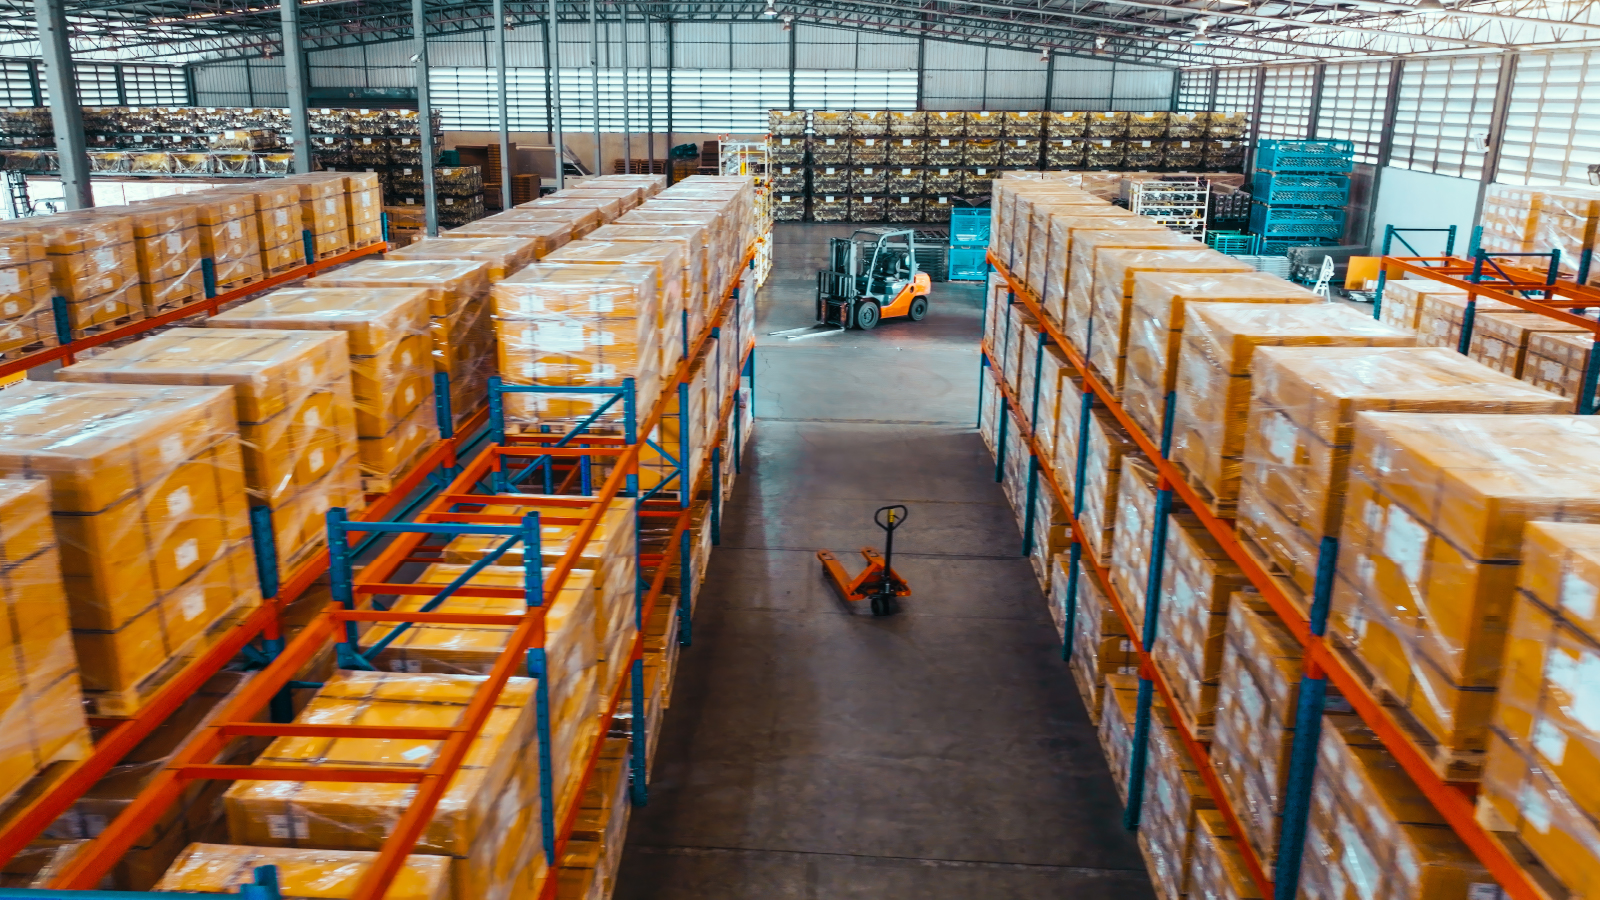 An image inside a warehouse